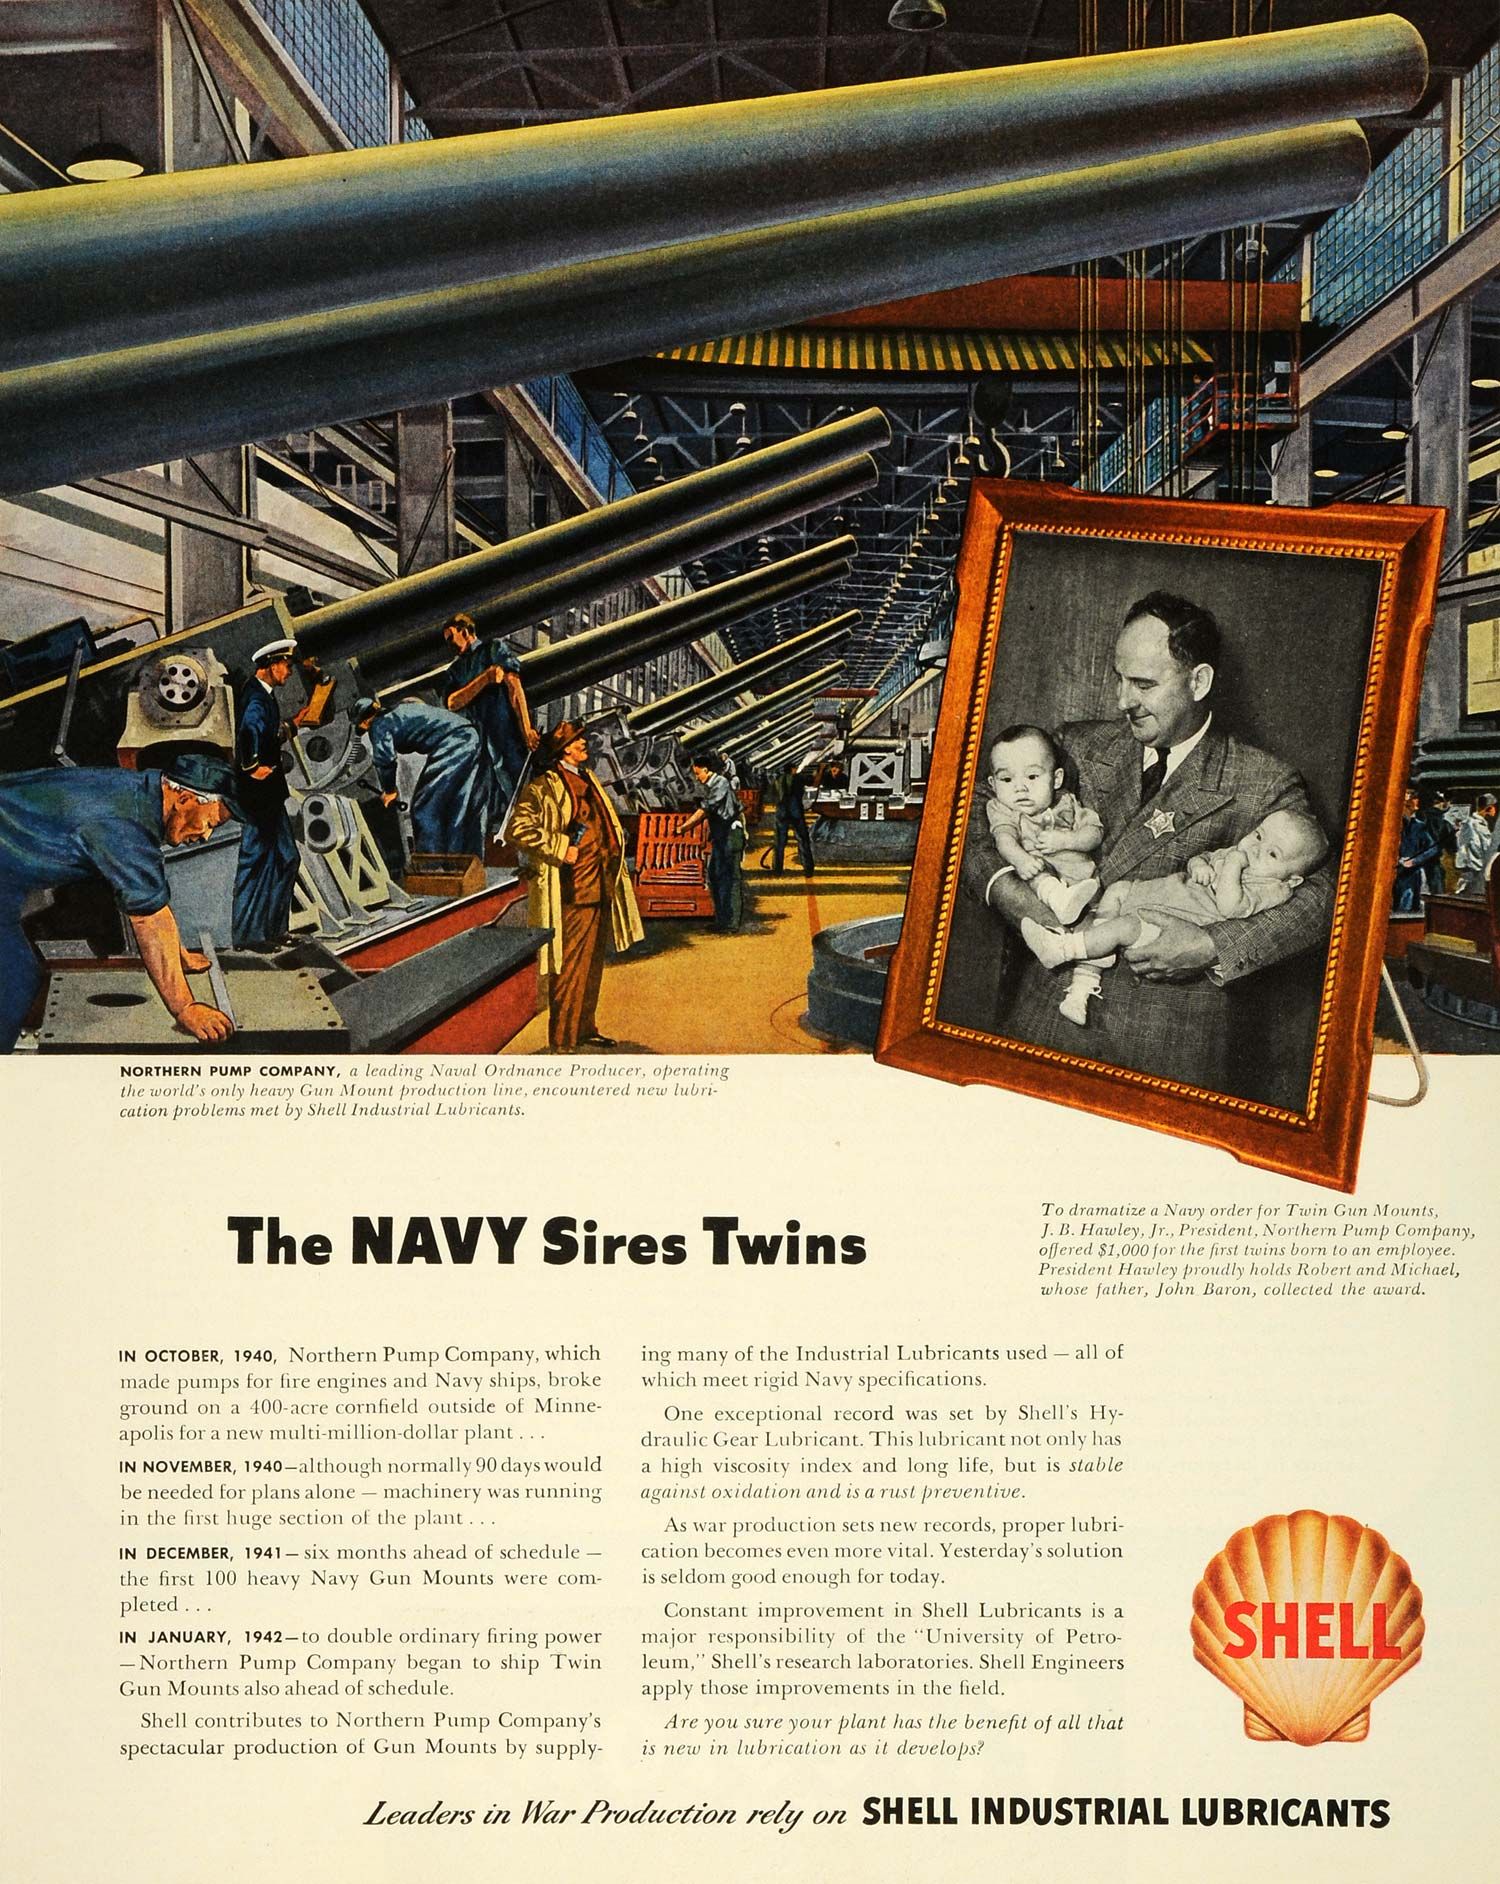 1943 Ad Shell Industrial Lubricants WWII War Production Twin Gun